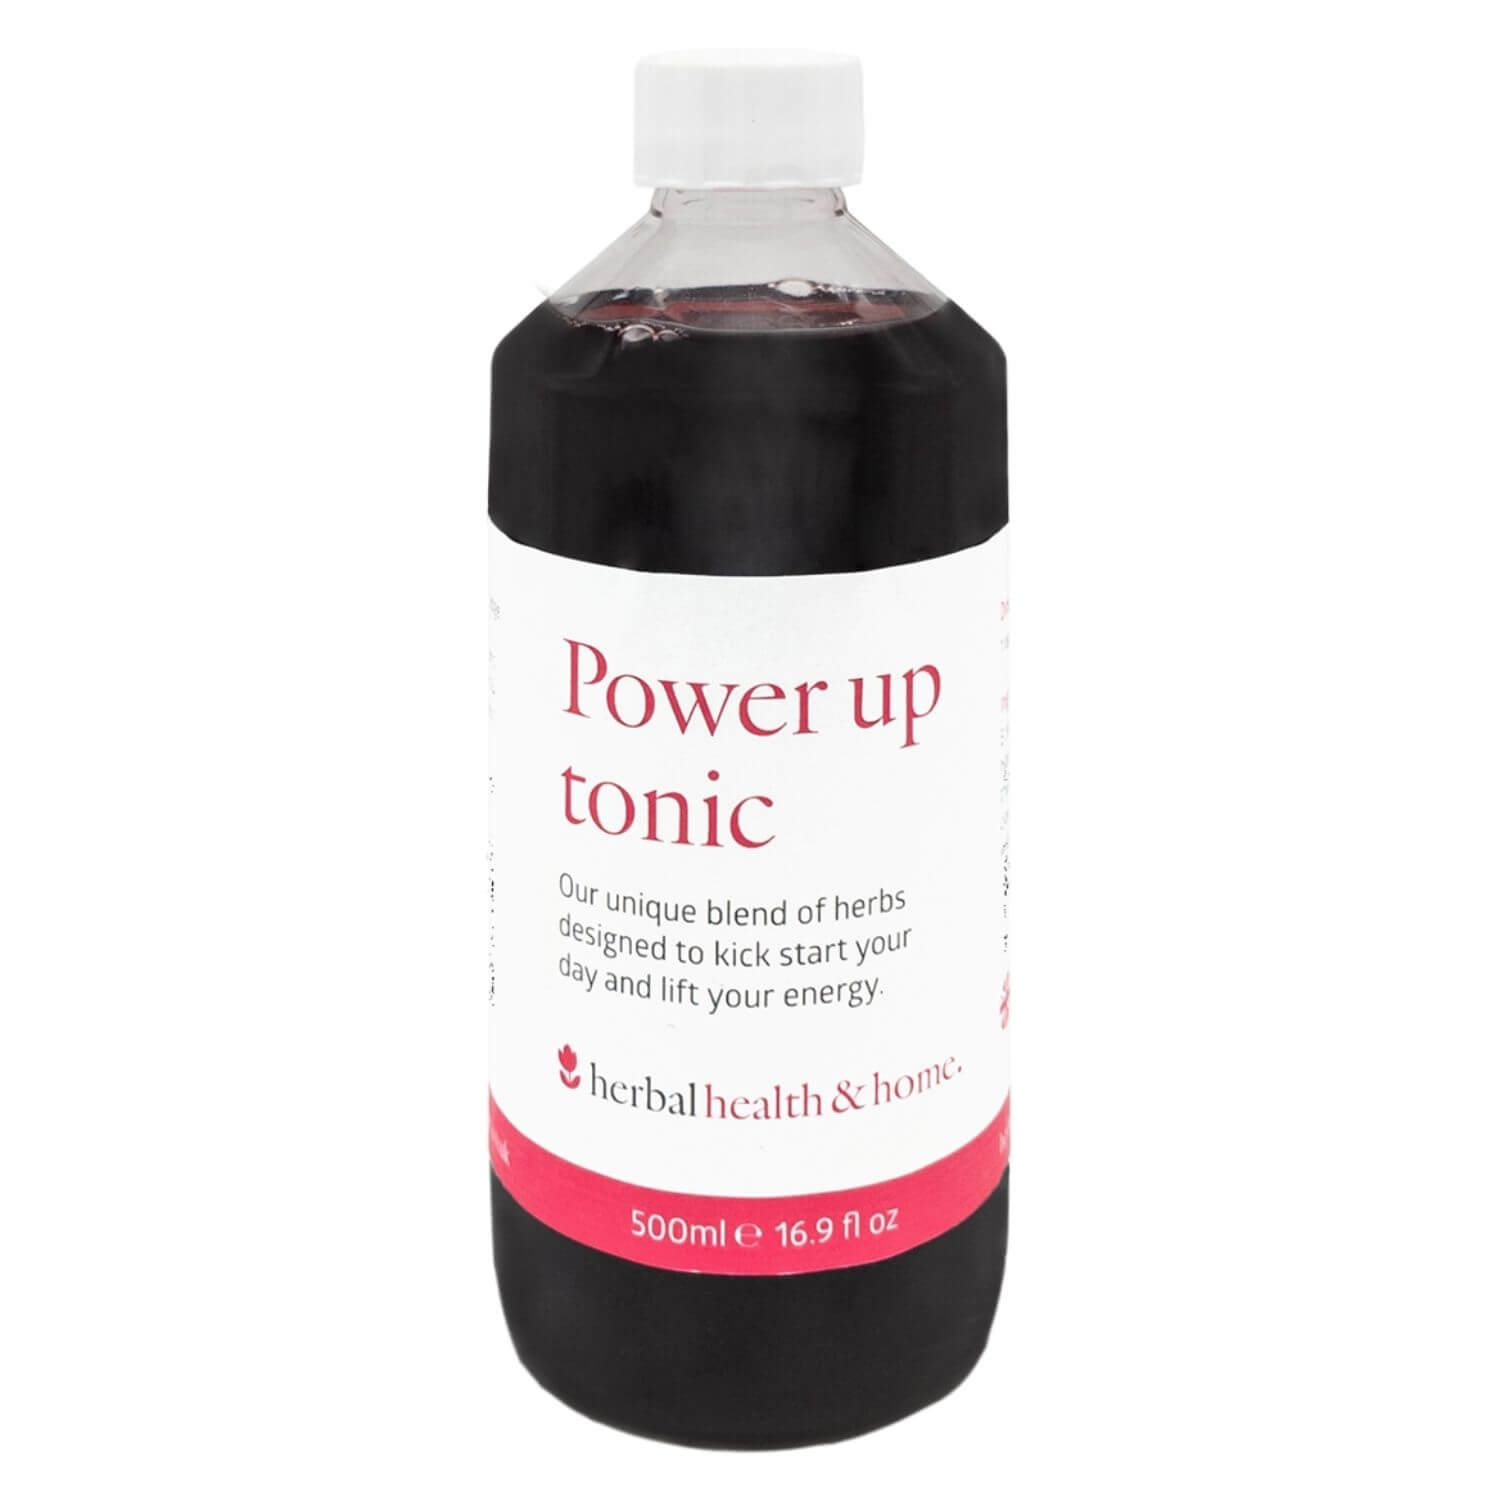 Power Up Tonic | Herbal, Health & Home